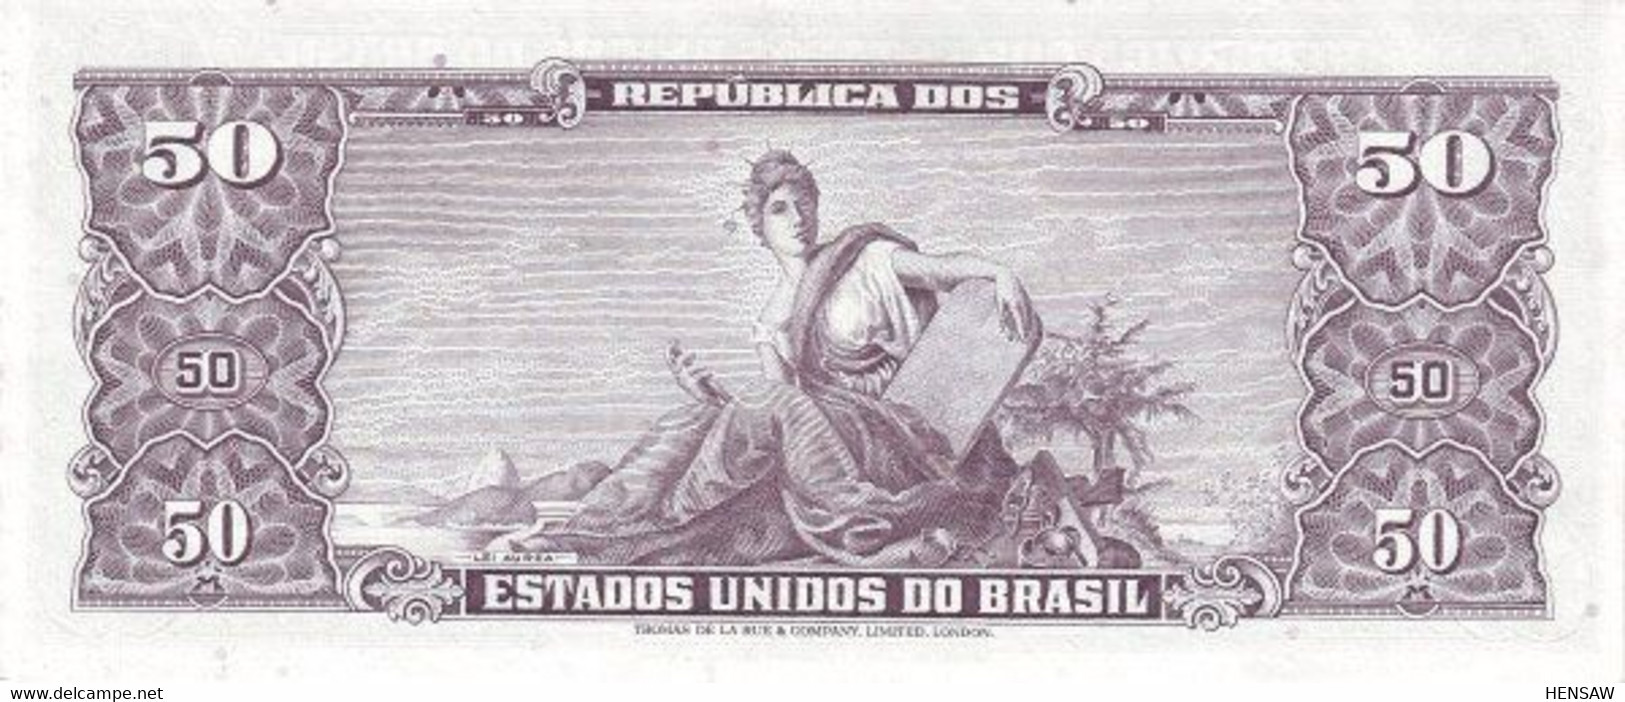 BRAZIL 5 CENTAVOS P 184b 1967 UNC SC NUEVO - Brasilien